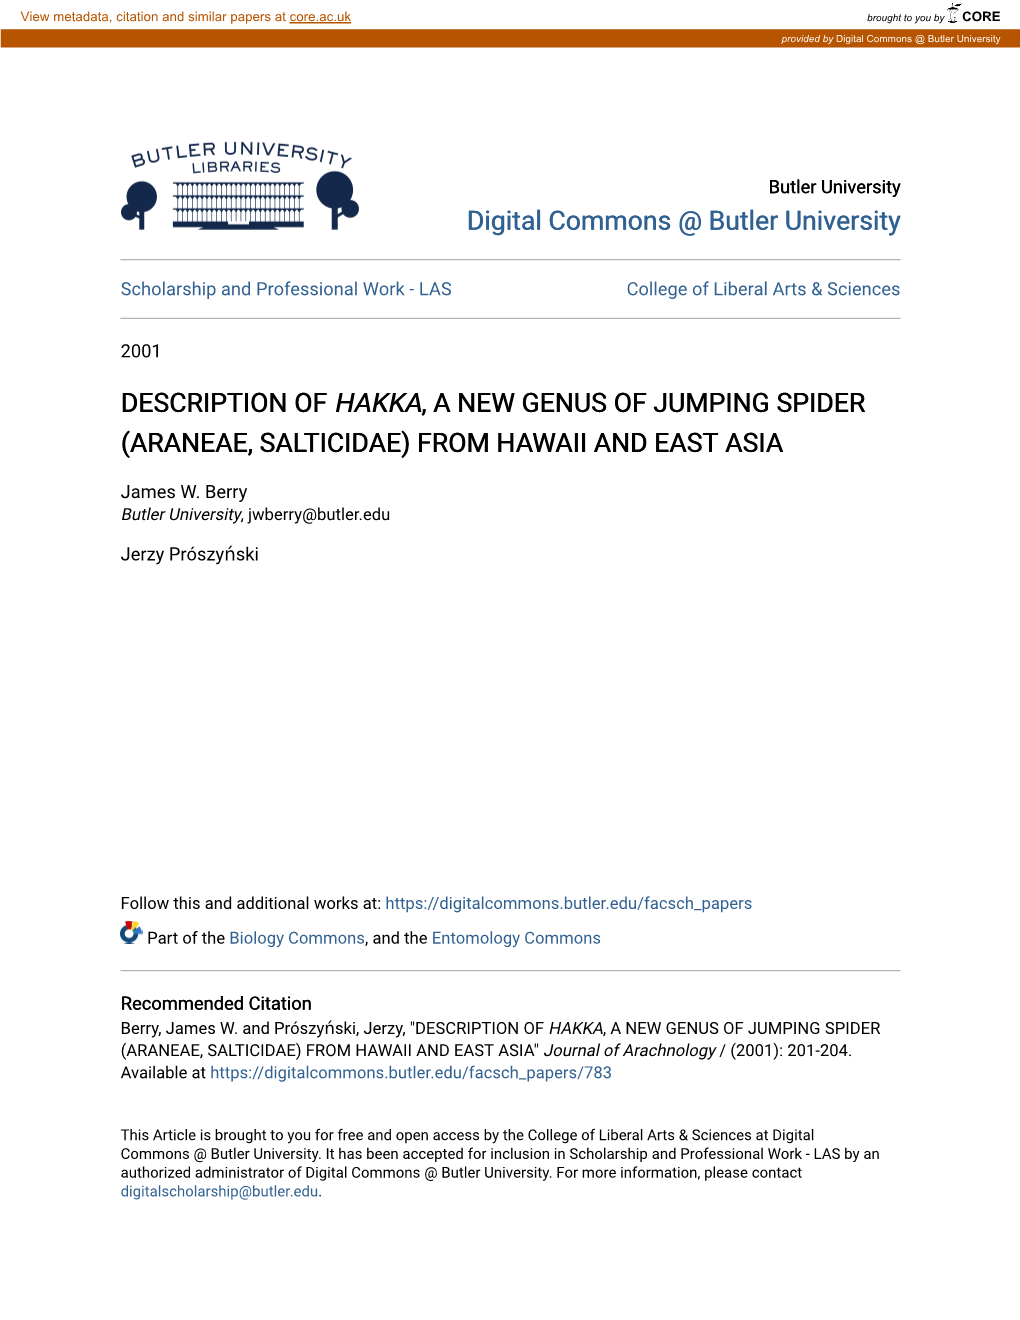 &lt;I&gt;HAKKA&lt;/I&gt;, a NEW GENUS of JUMPING SPIDER (ARANEAE, SALTICIDAE)